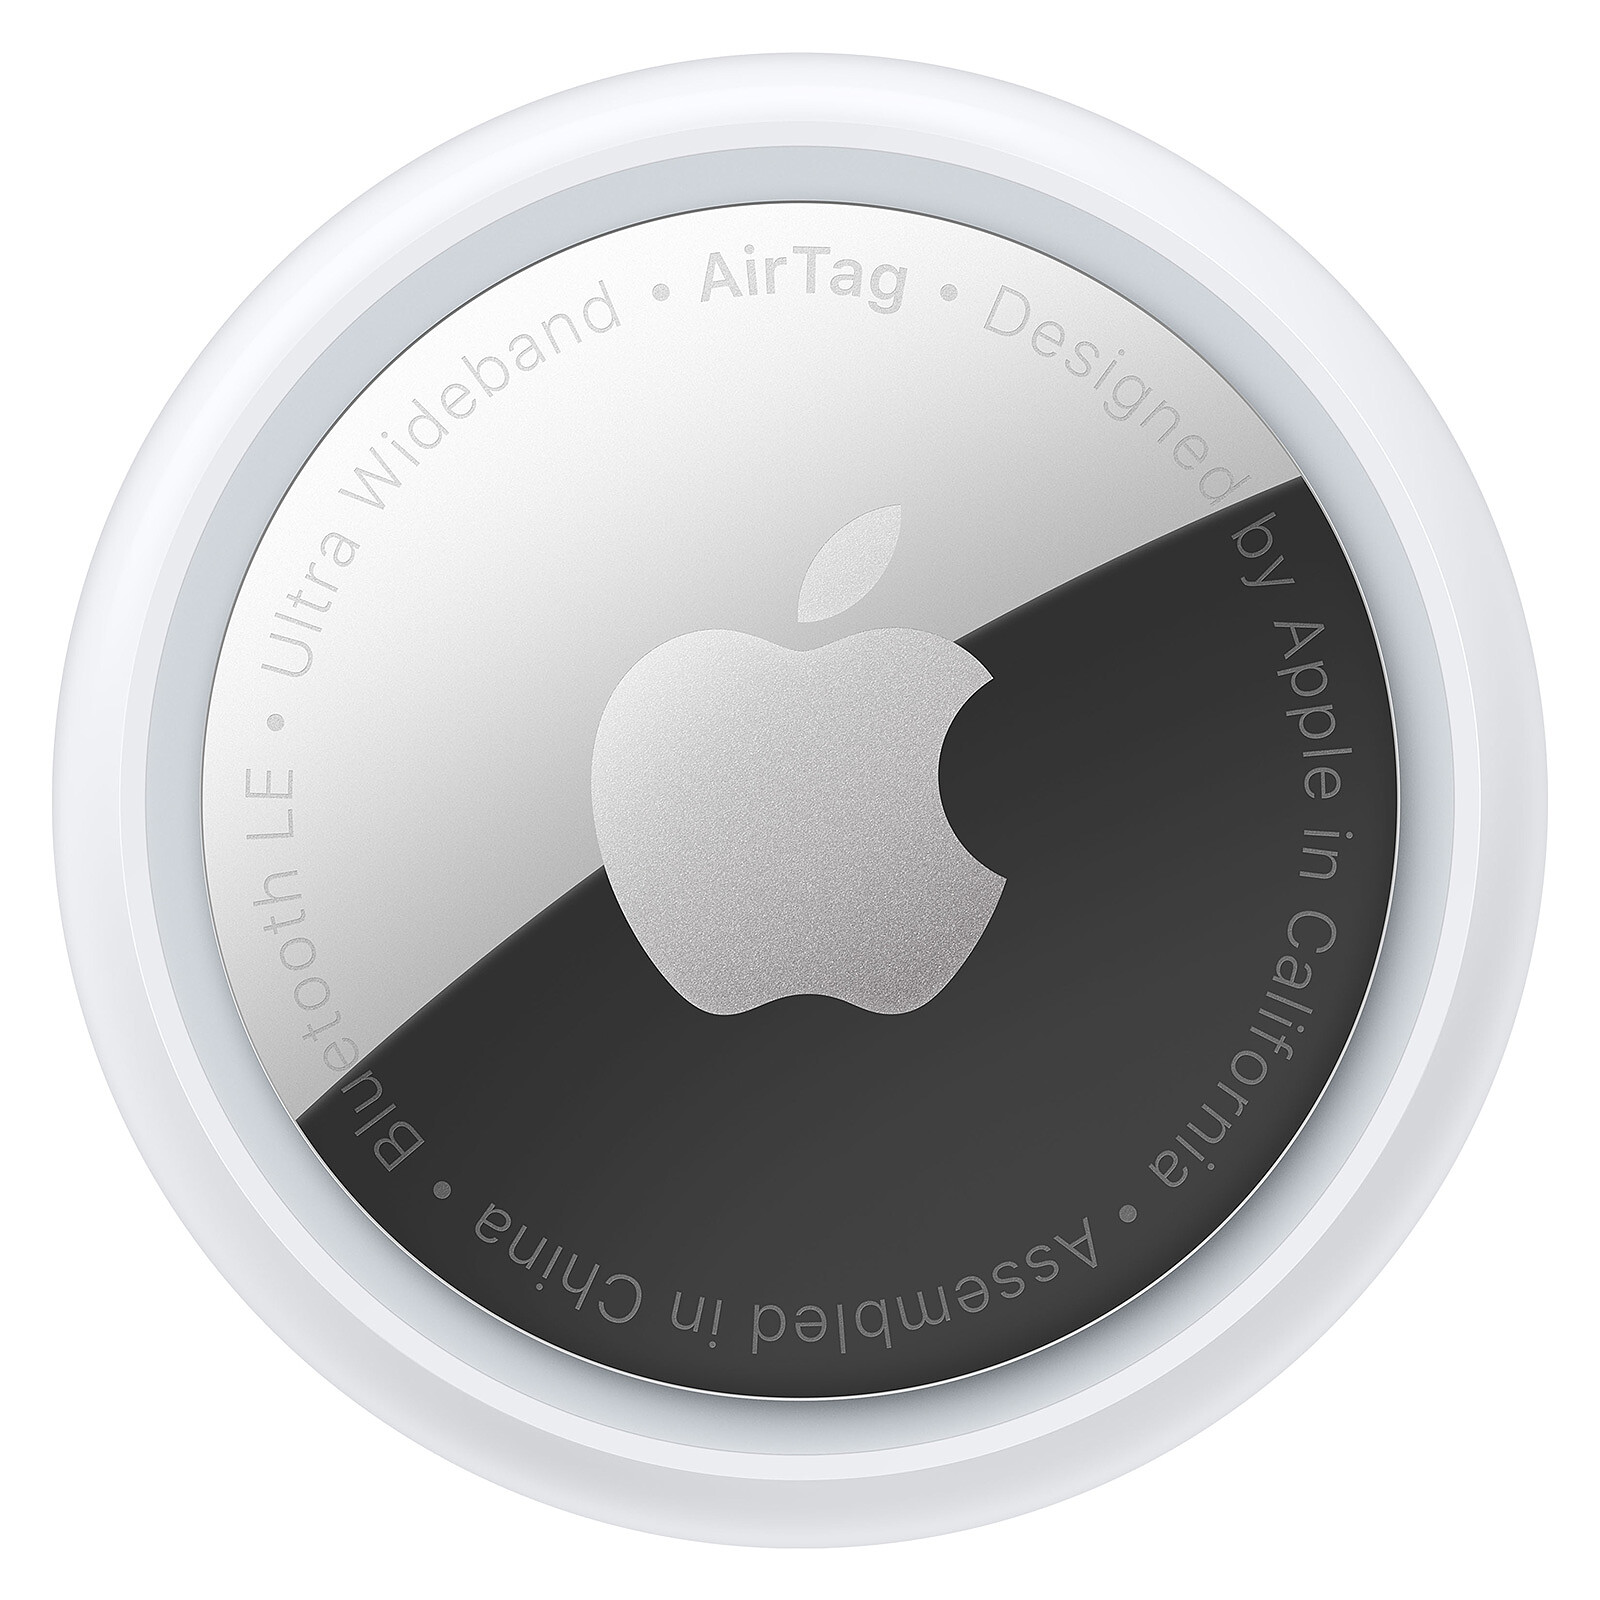 Apple AirTag FineWoven Key Ring Bleu Pacifique - Accessoires iPhone -  Garantie 3 ans LDLC